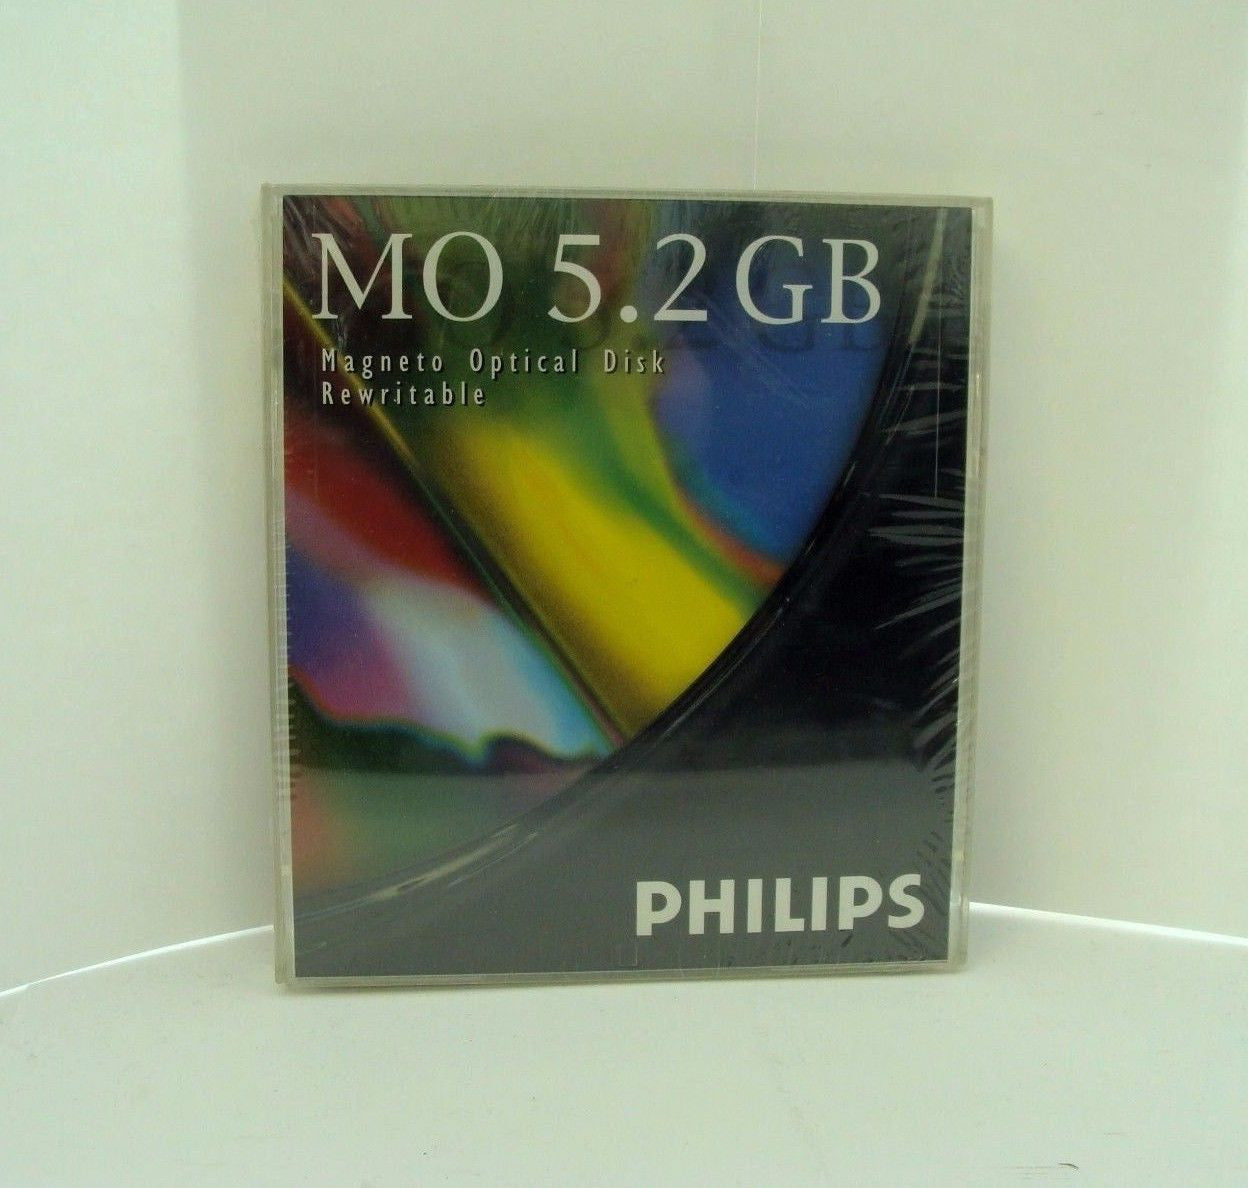 NEW Philips 83PDO MO 5.2GB Optical Disk 5.25" Rewritable (Same as EDM-5200C) - Micro Technologies (yourdrives.com)